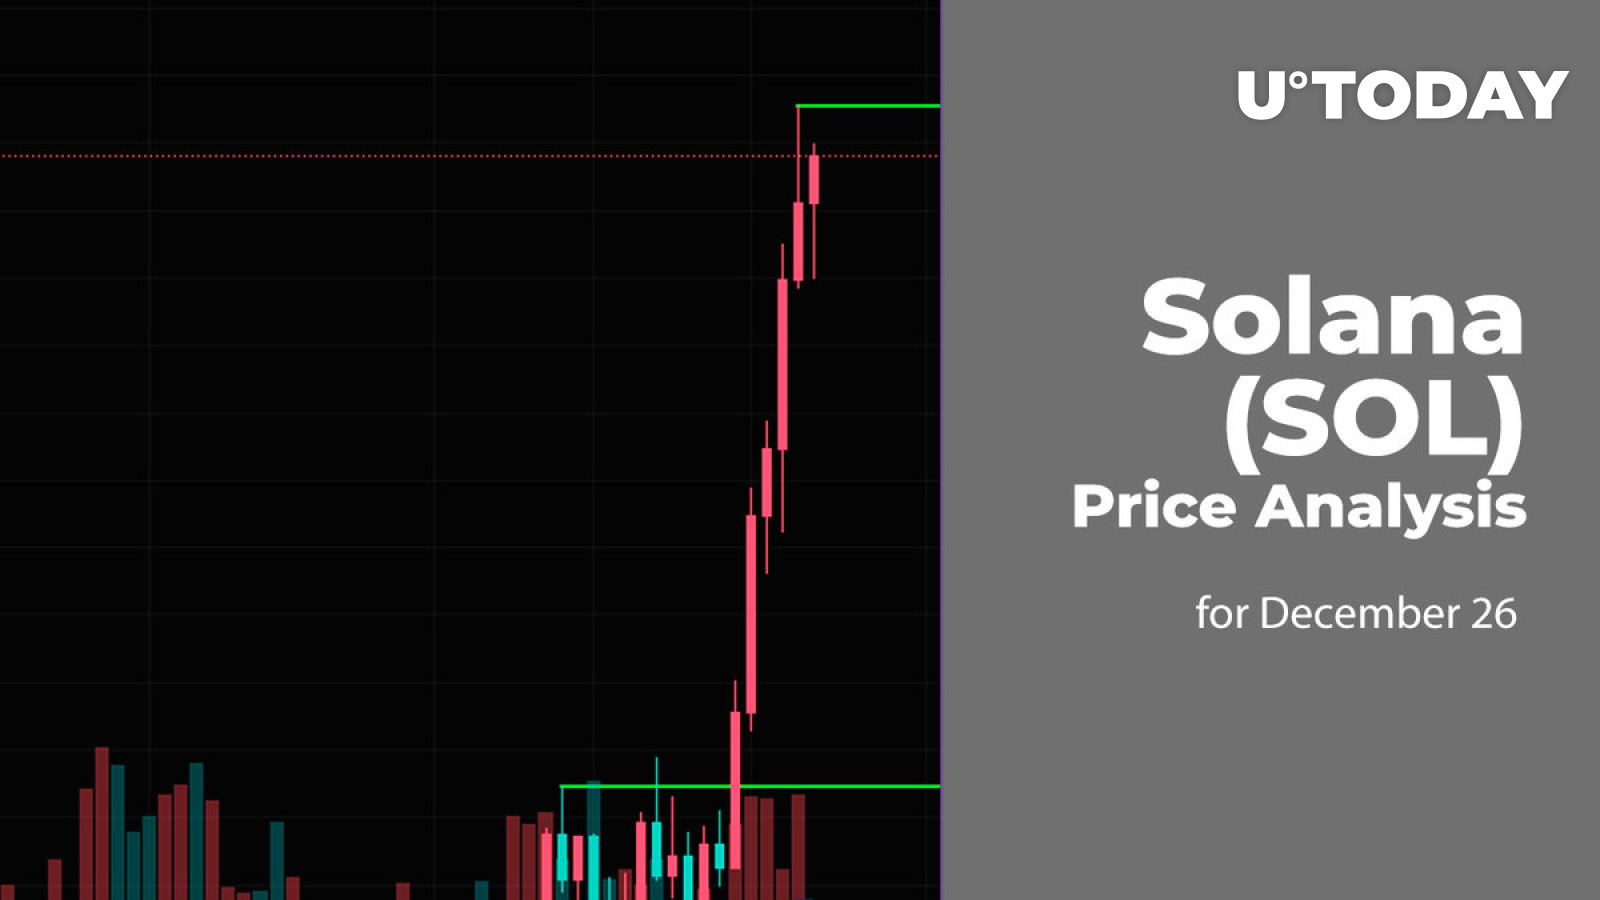 Solana (SOL) Price Analysis for December 26